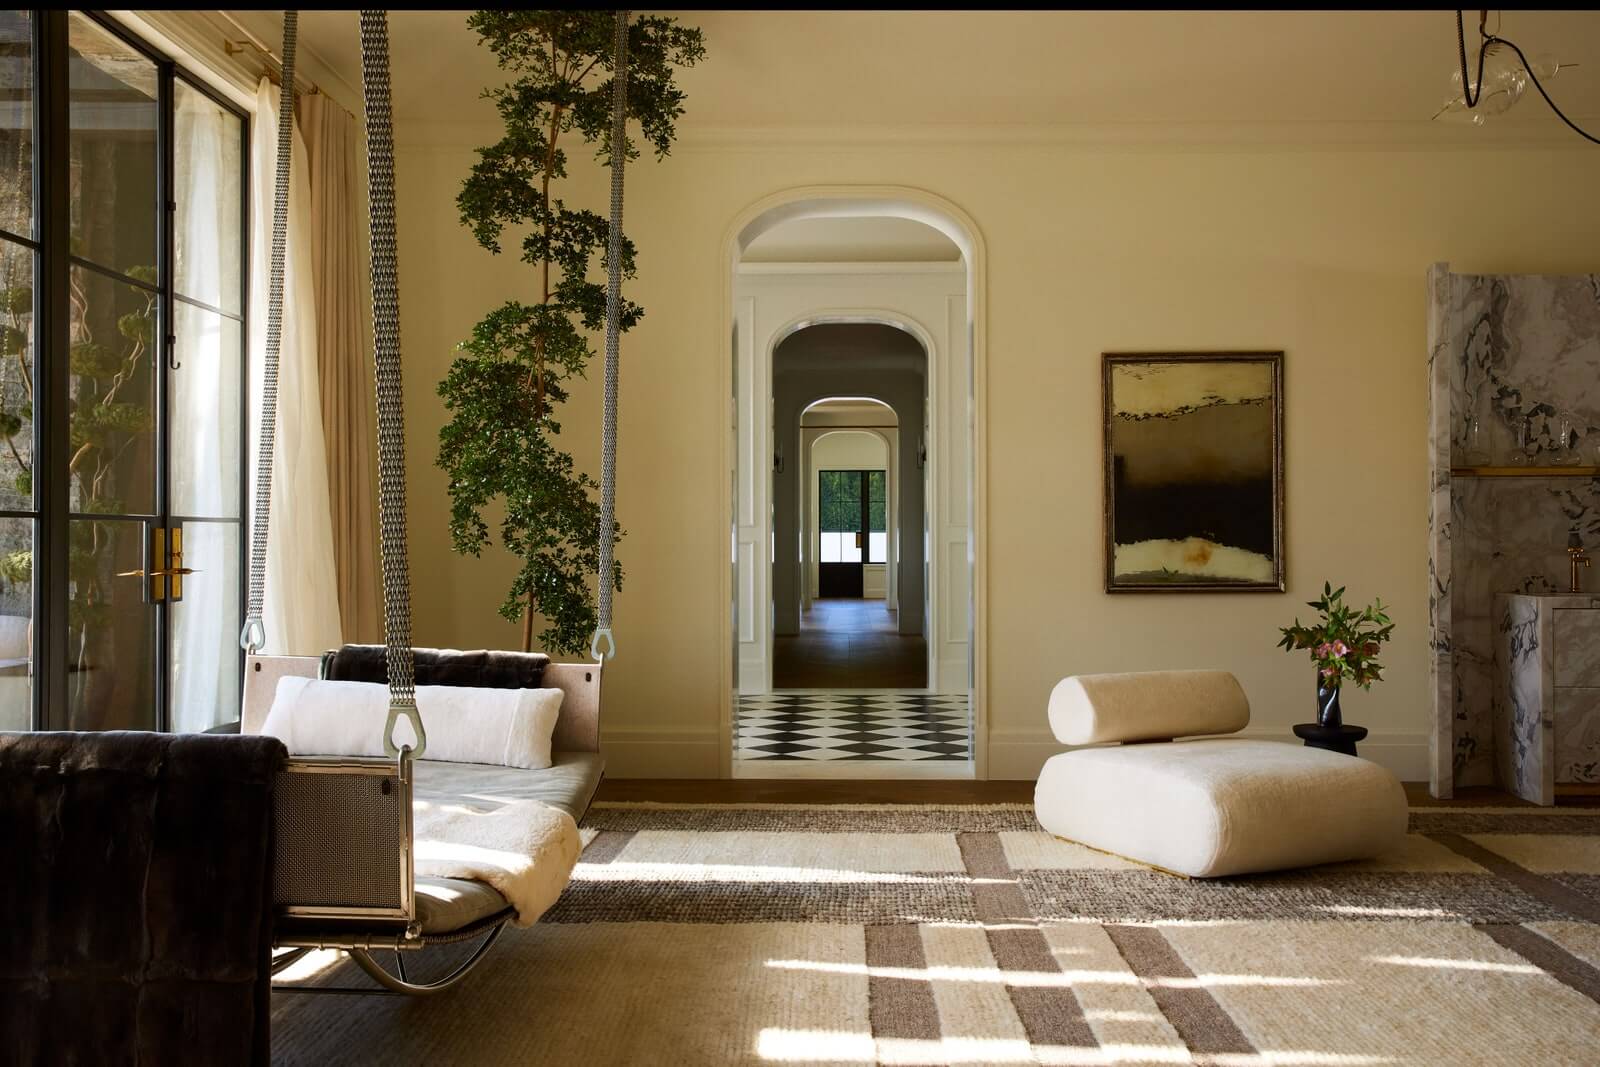 Gwyneth Paltrow's home with holistic interior design